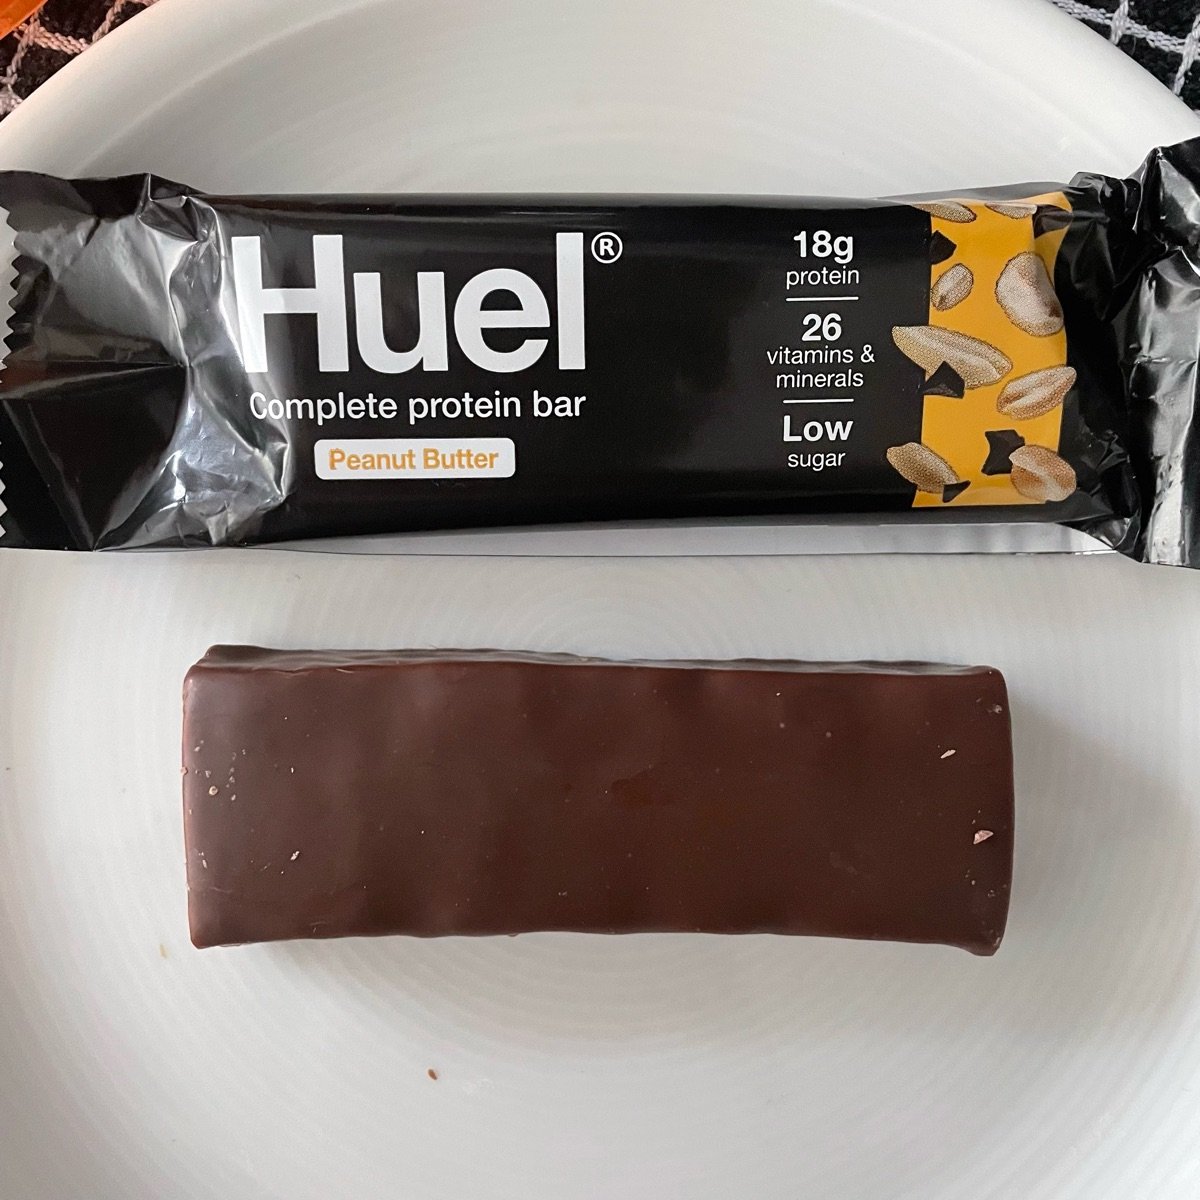 Huel Complete Protein Bar Peanut Butter Reviews | abillion